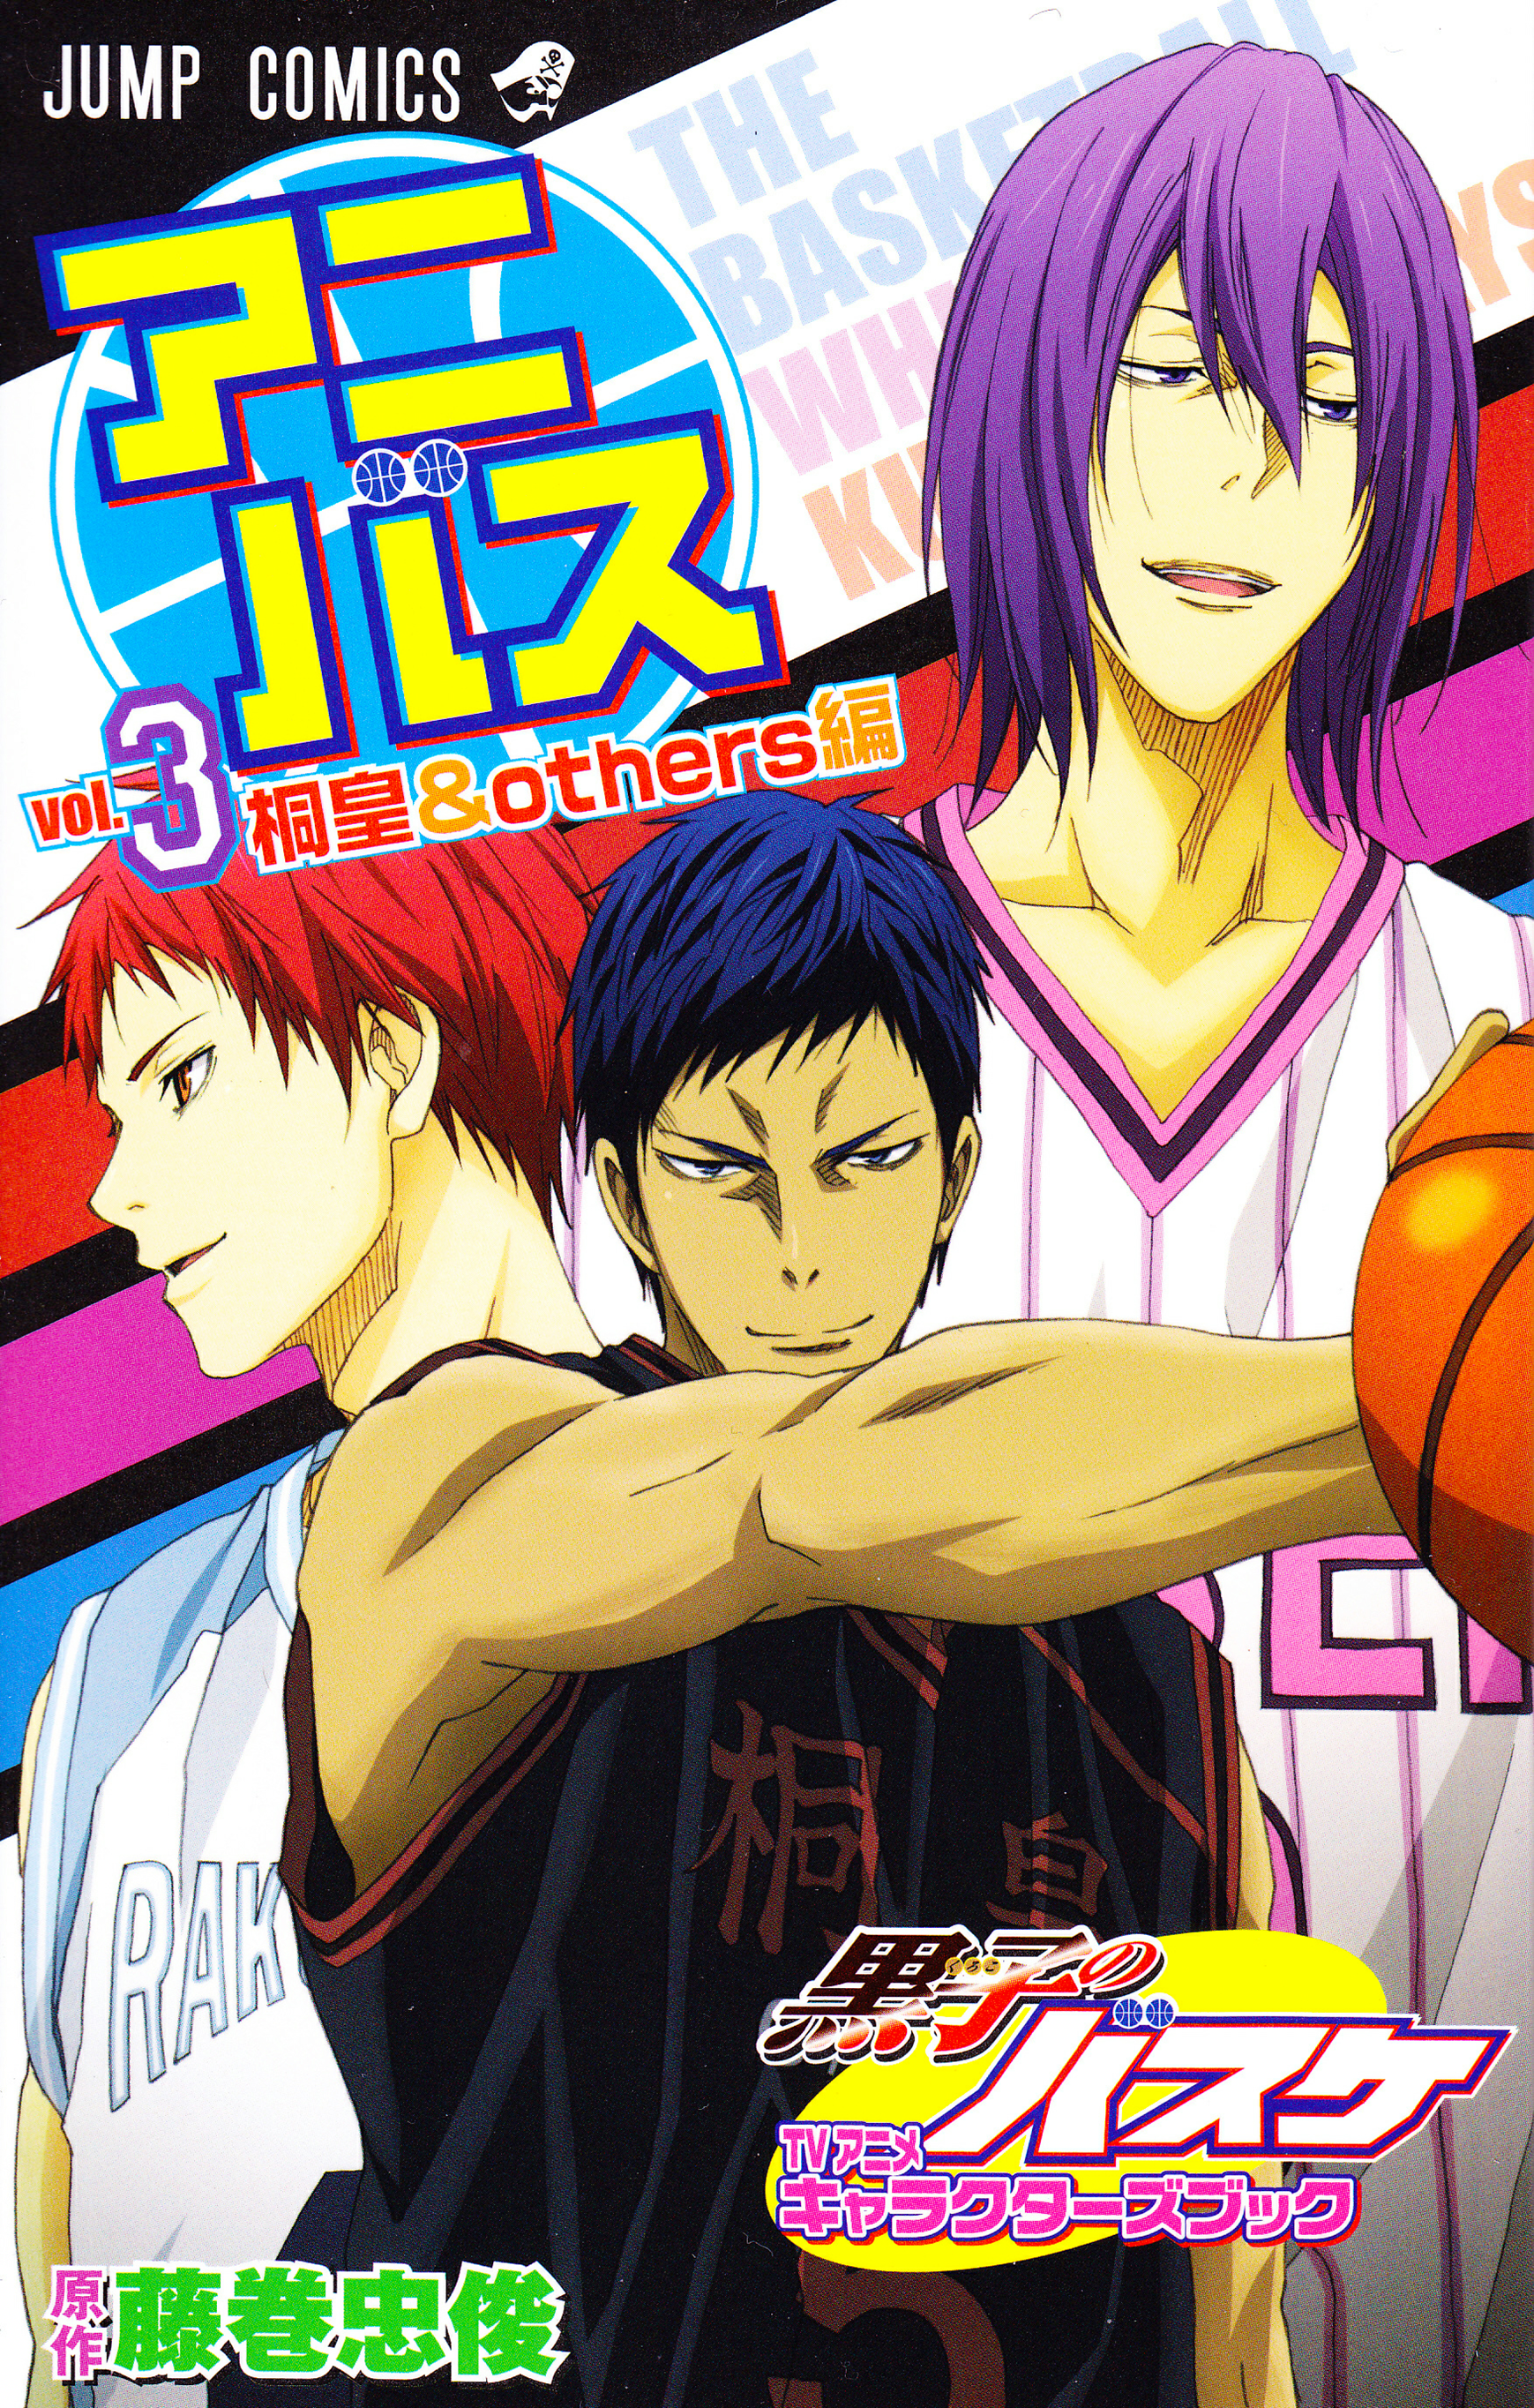 Kuroko's Basketball Kuroko no Basuke Official Fan Book Characters